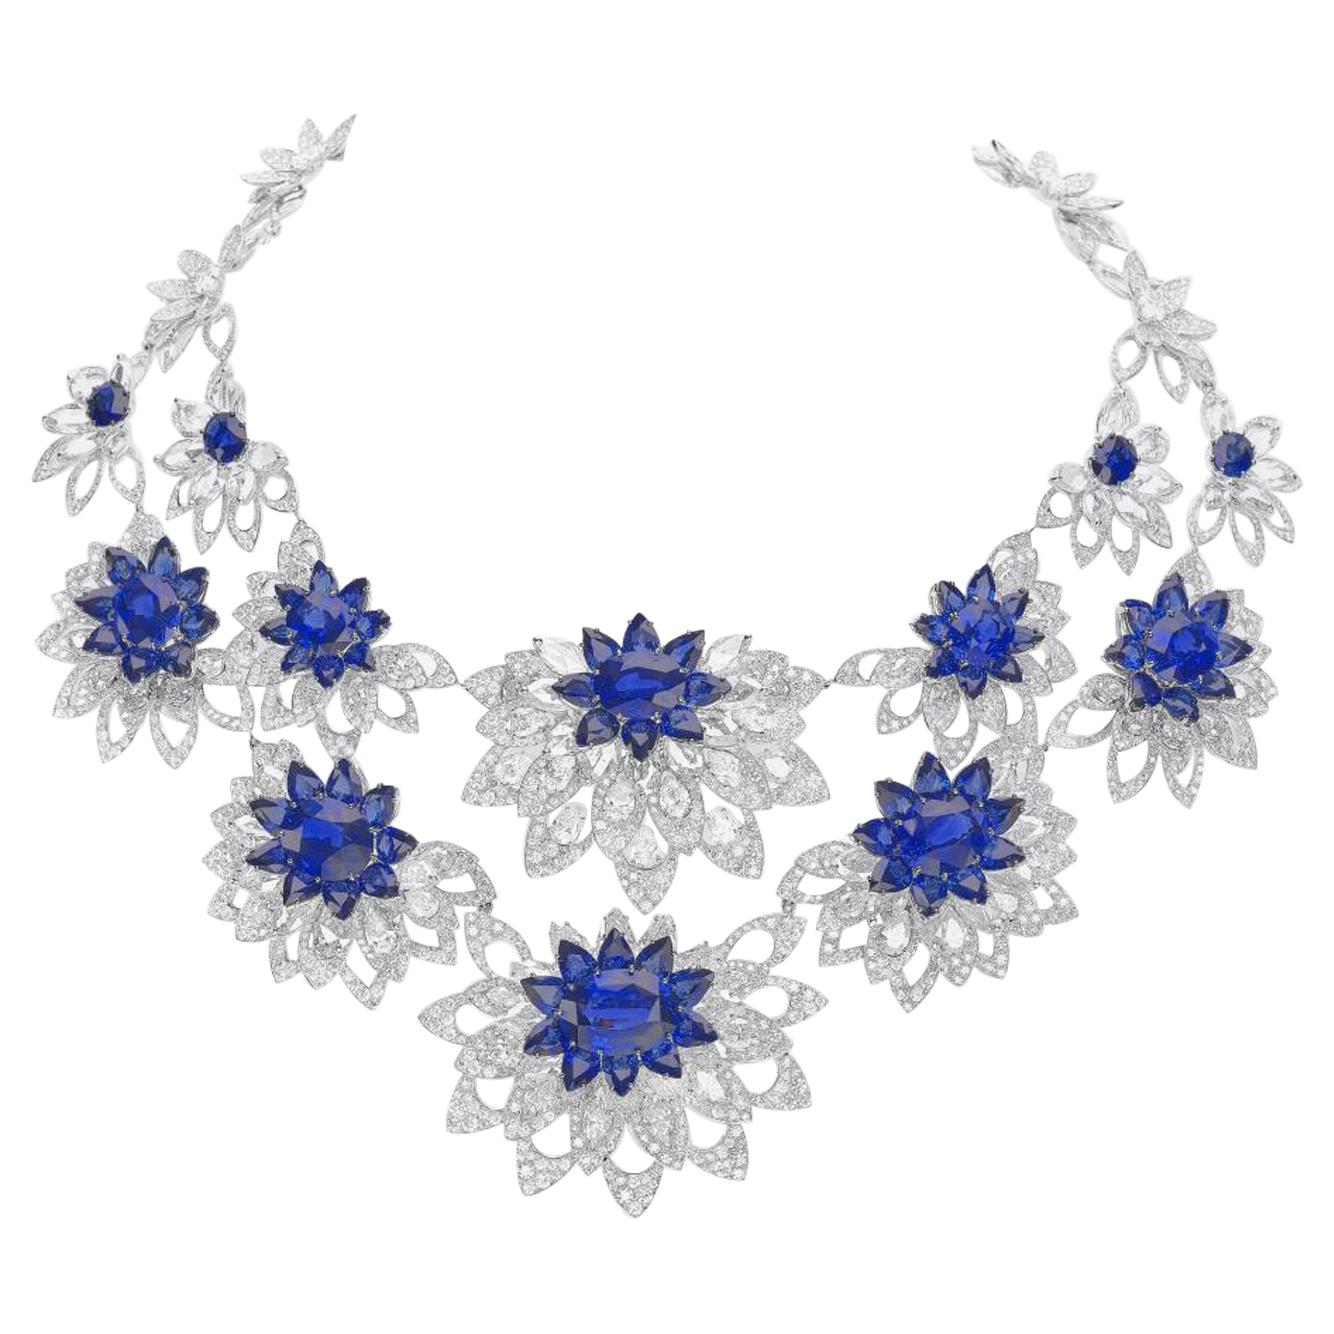 18 Karat White Gold Diamond and Blue Sapphire Necklace